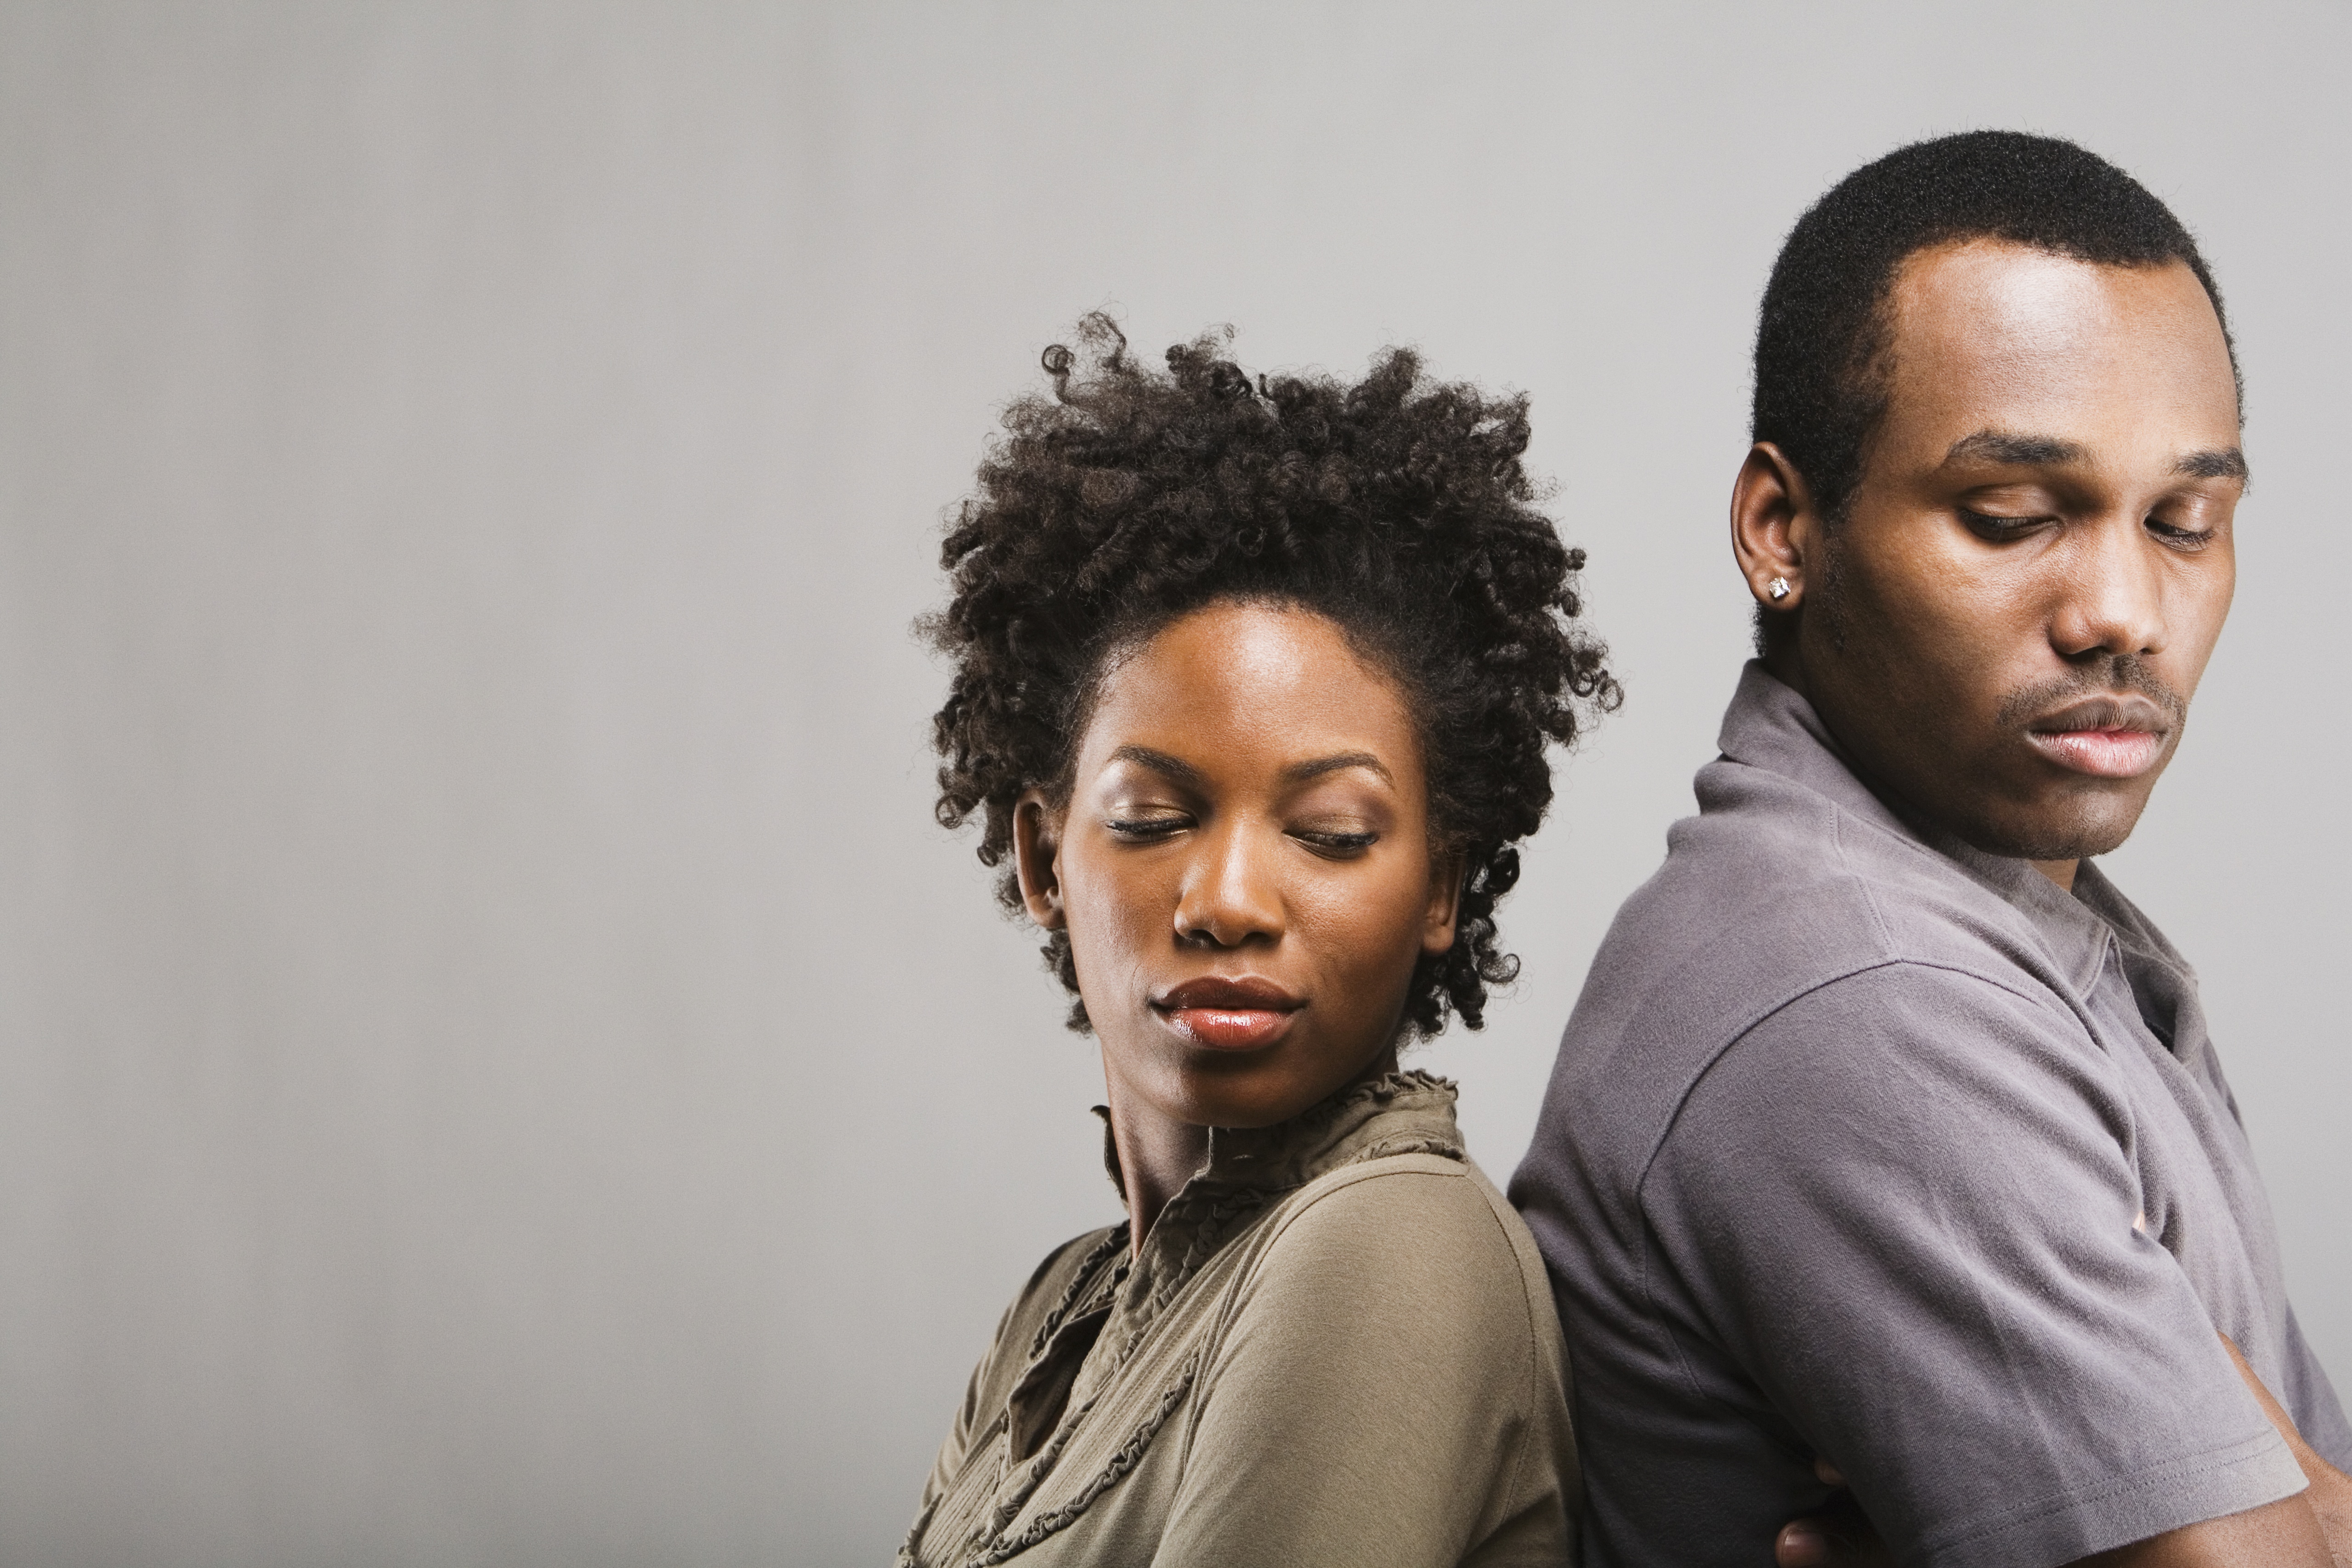 Pareja afroamericana se dan la espalda | Fuente: Getty Images